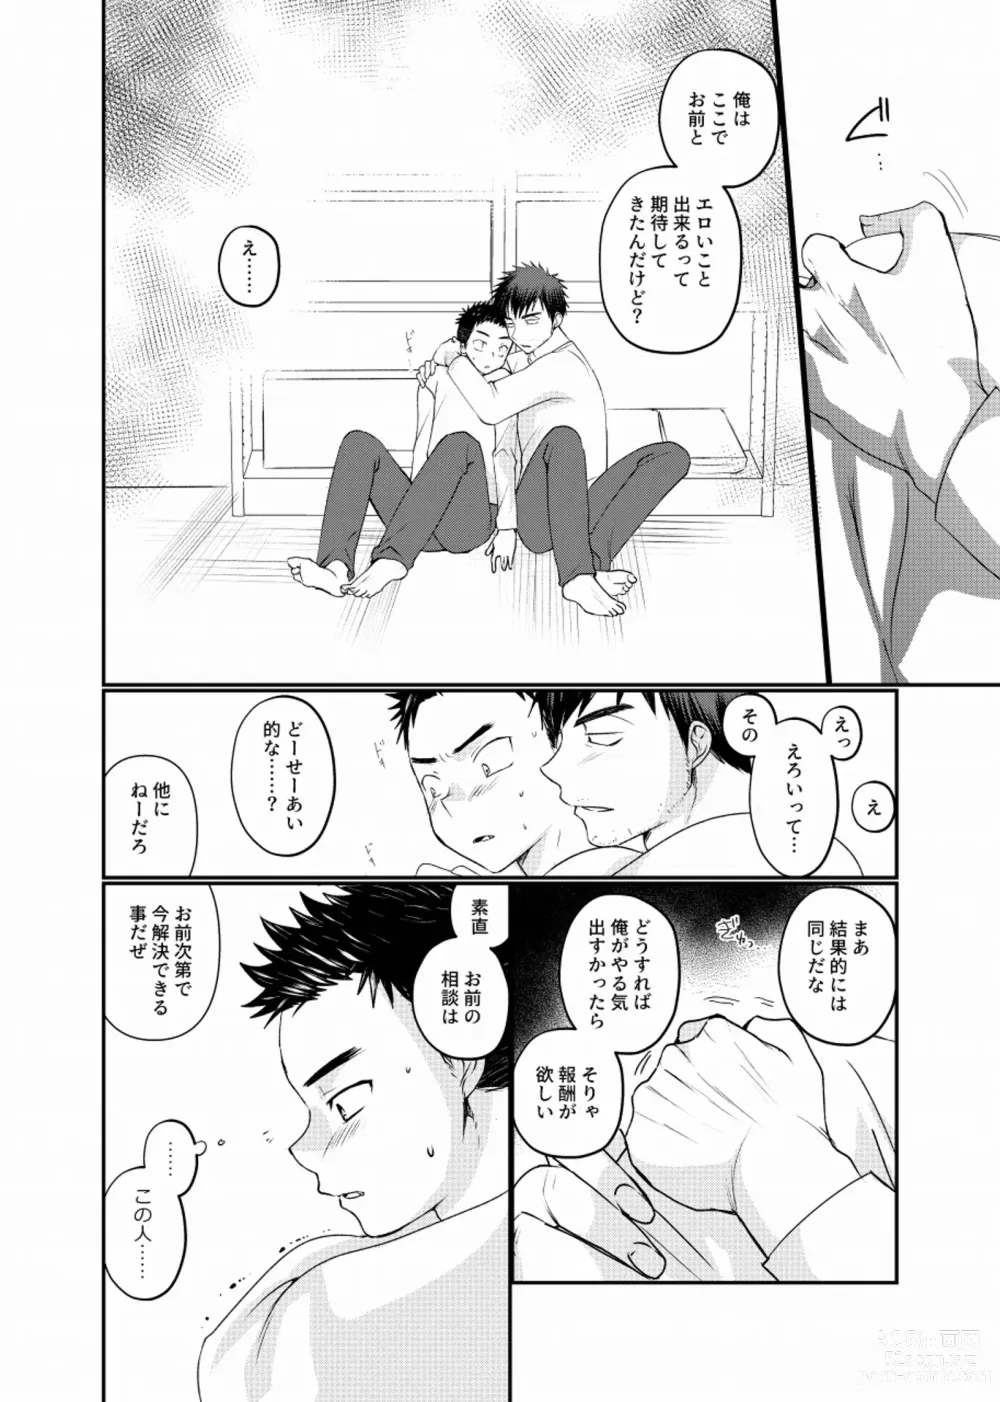 Page 19 of doujinshi 地下労働格闘少年